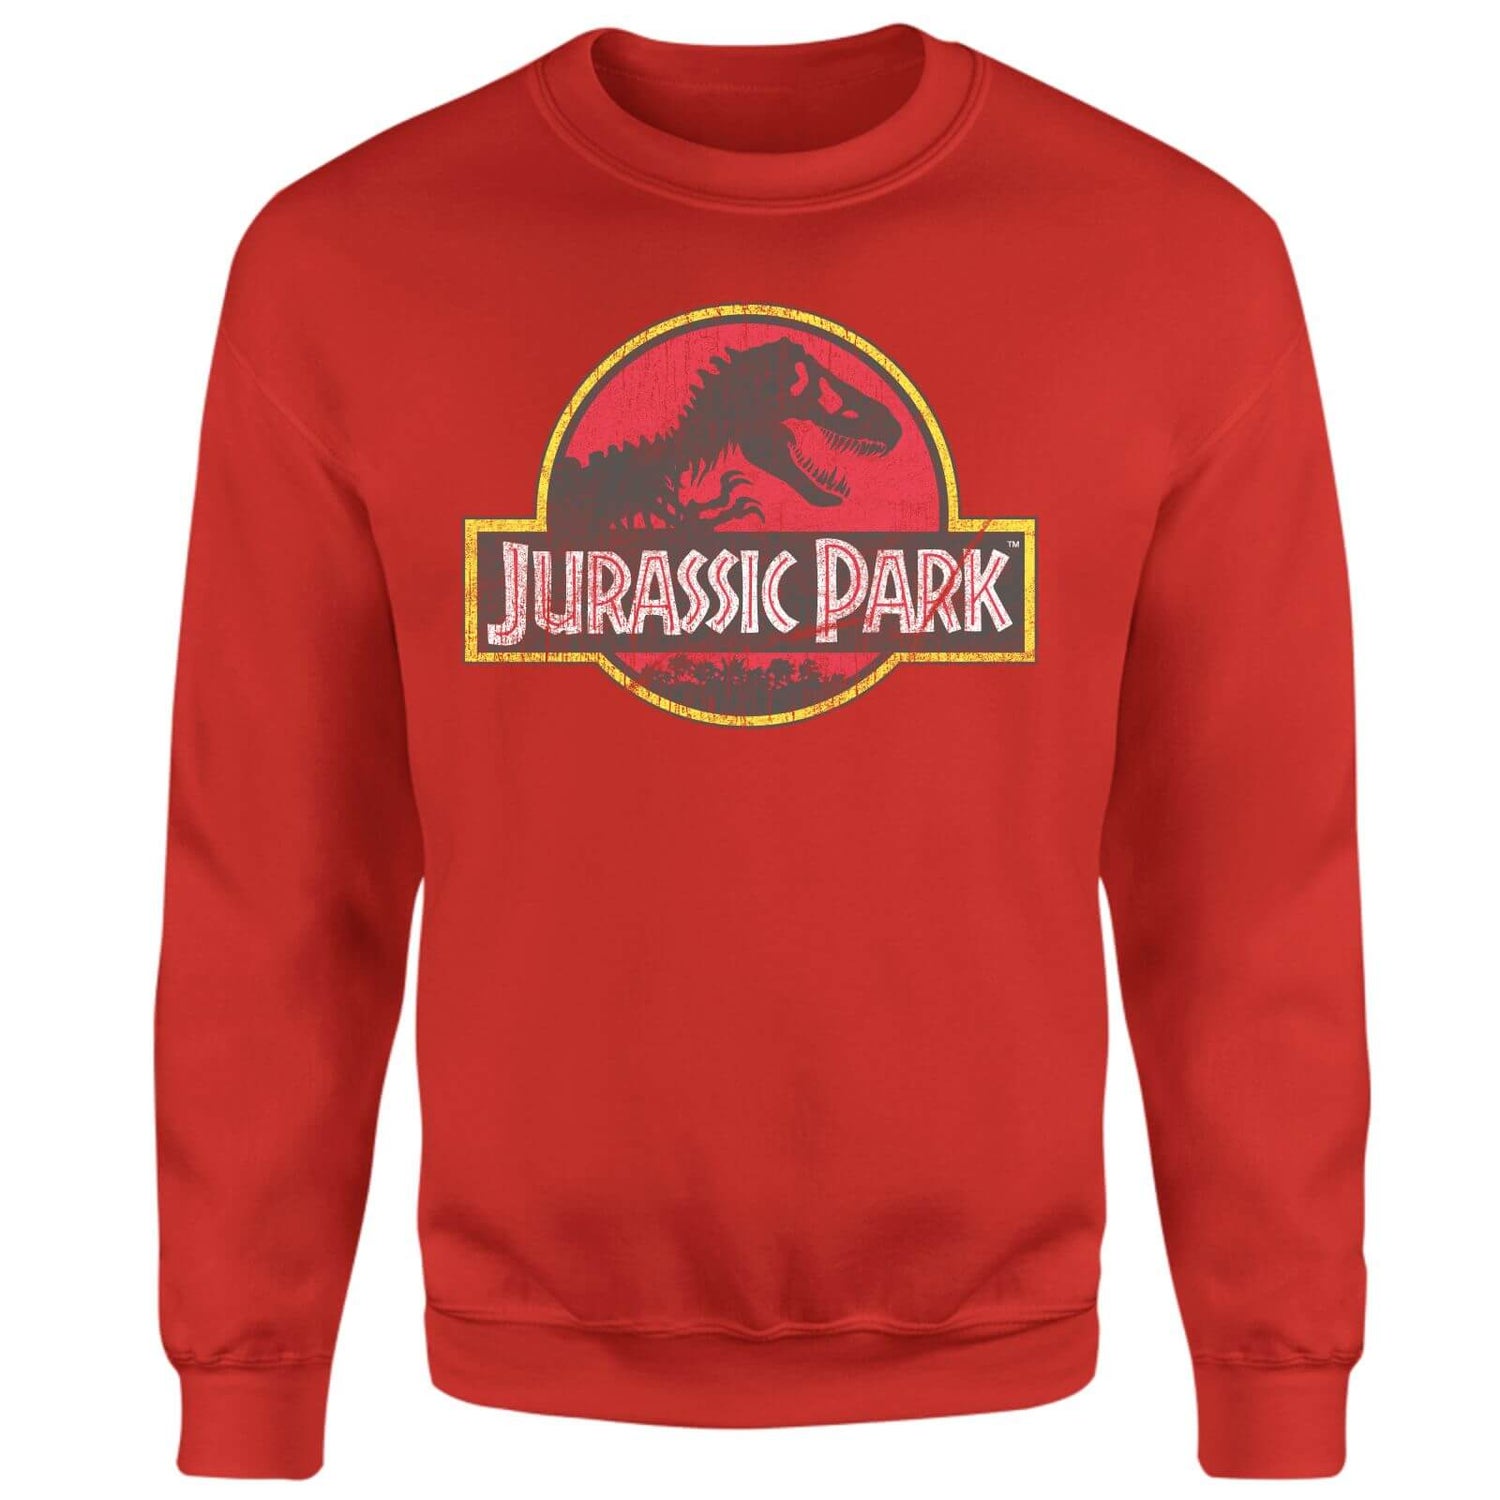 Jurassic Park Logo Vintage Sweatshirt - Red